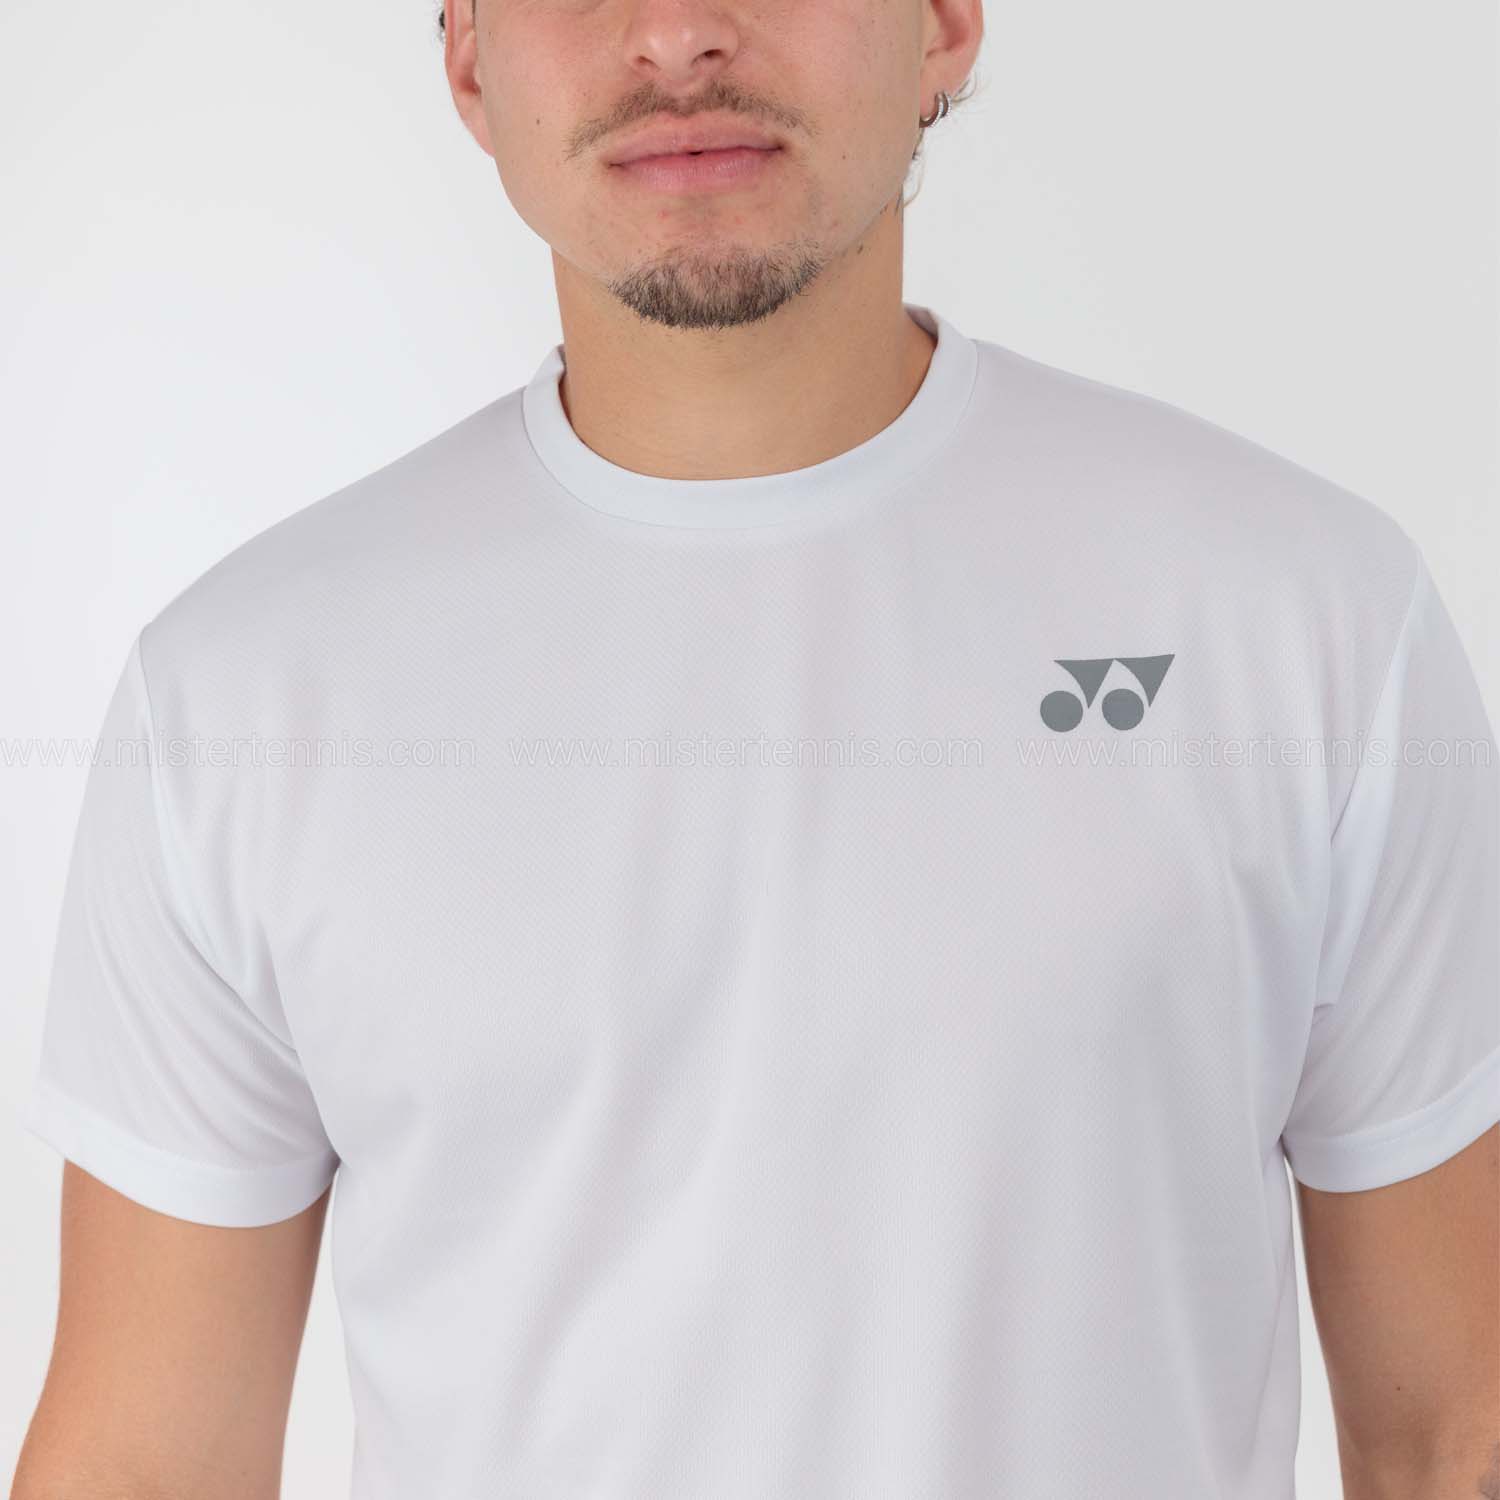 Yonex Practice Camiseta - White